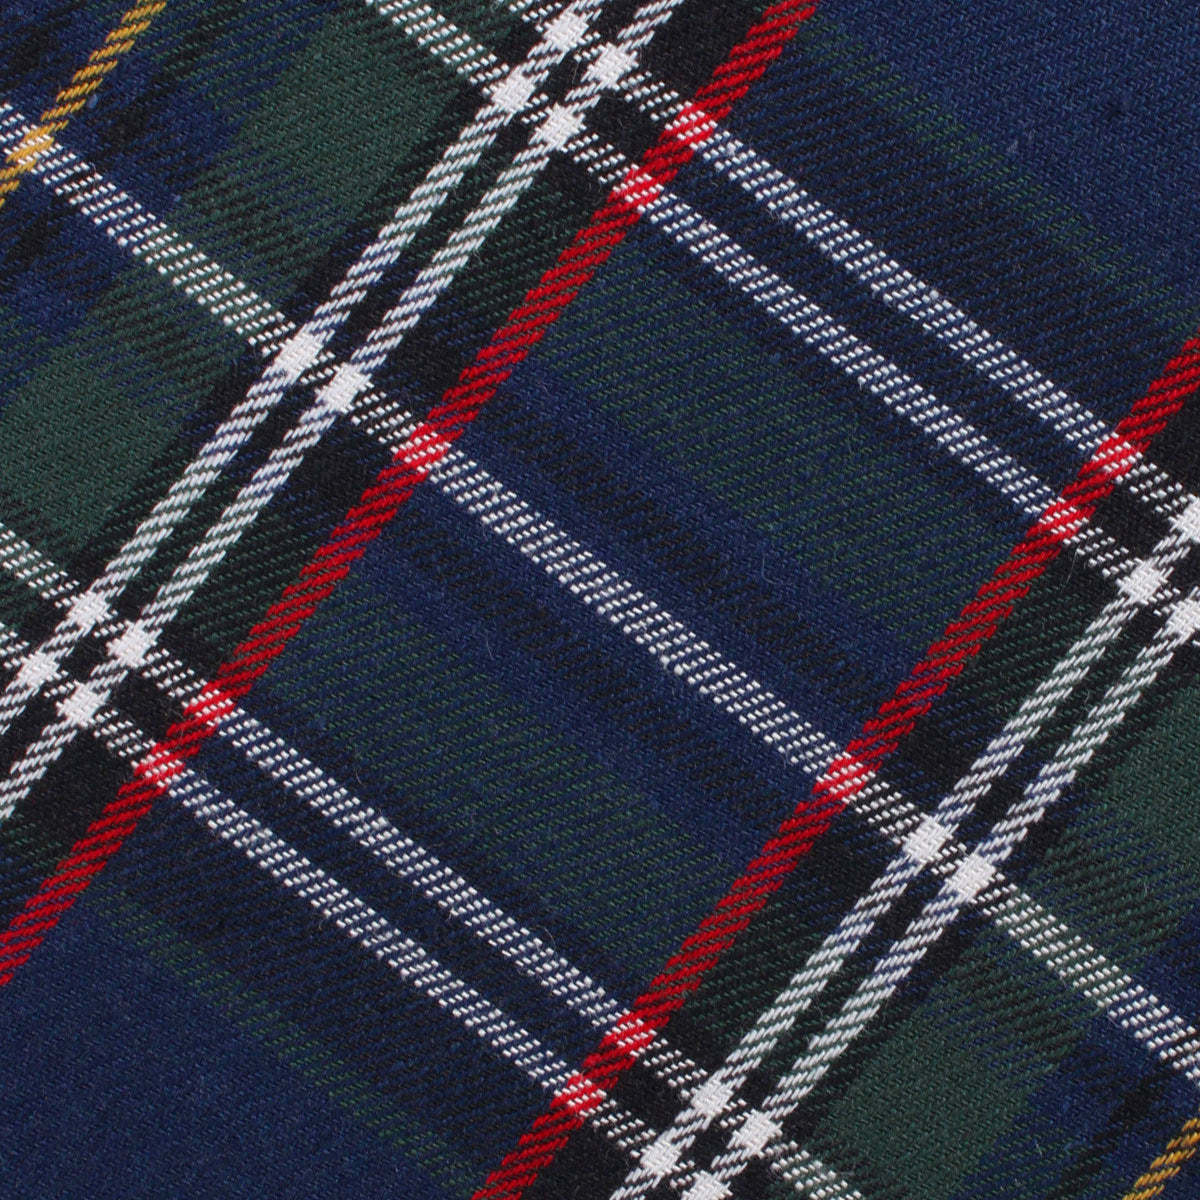 Green Scottish Kilt Fabric Pocket Square